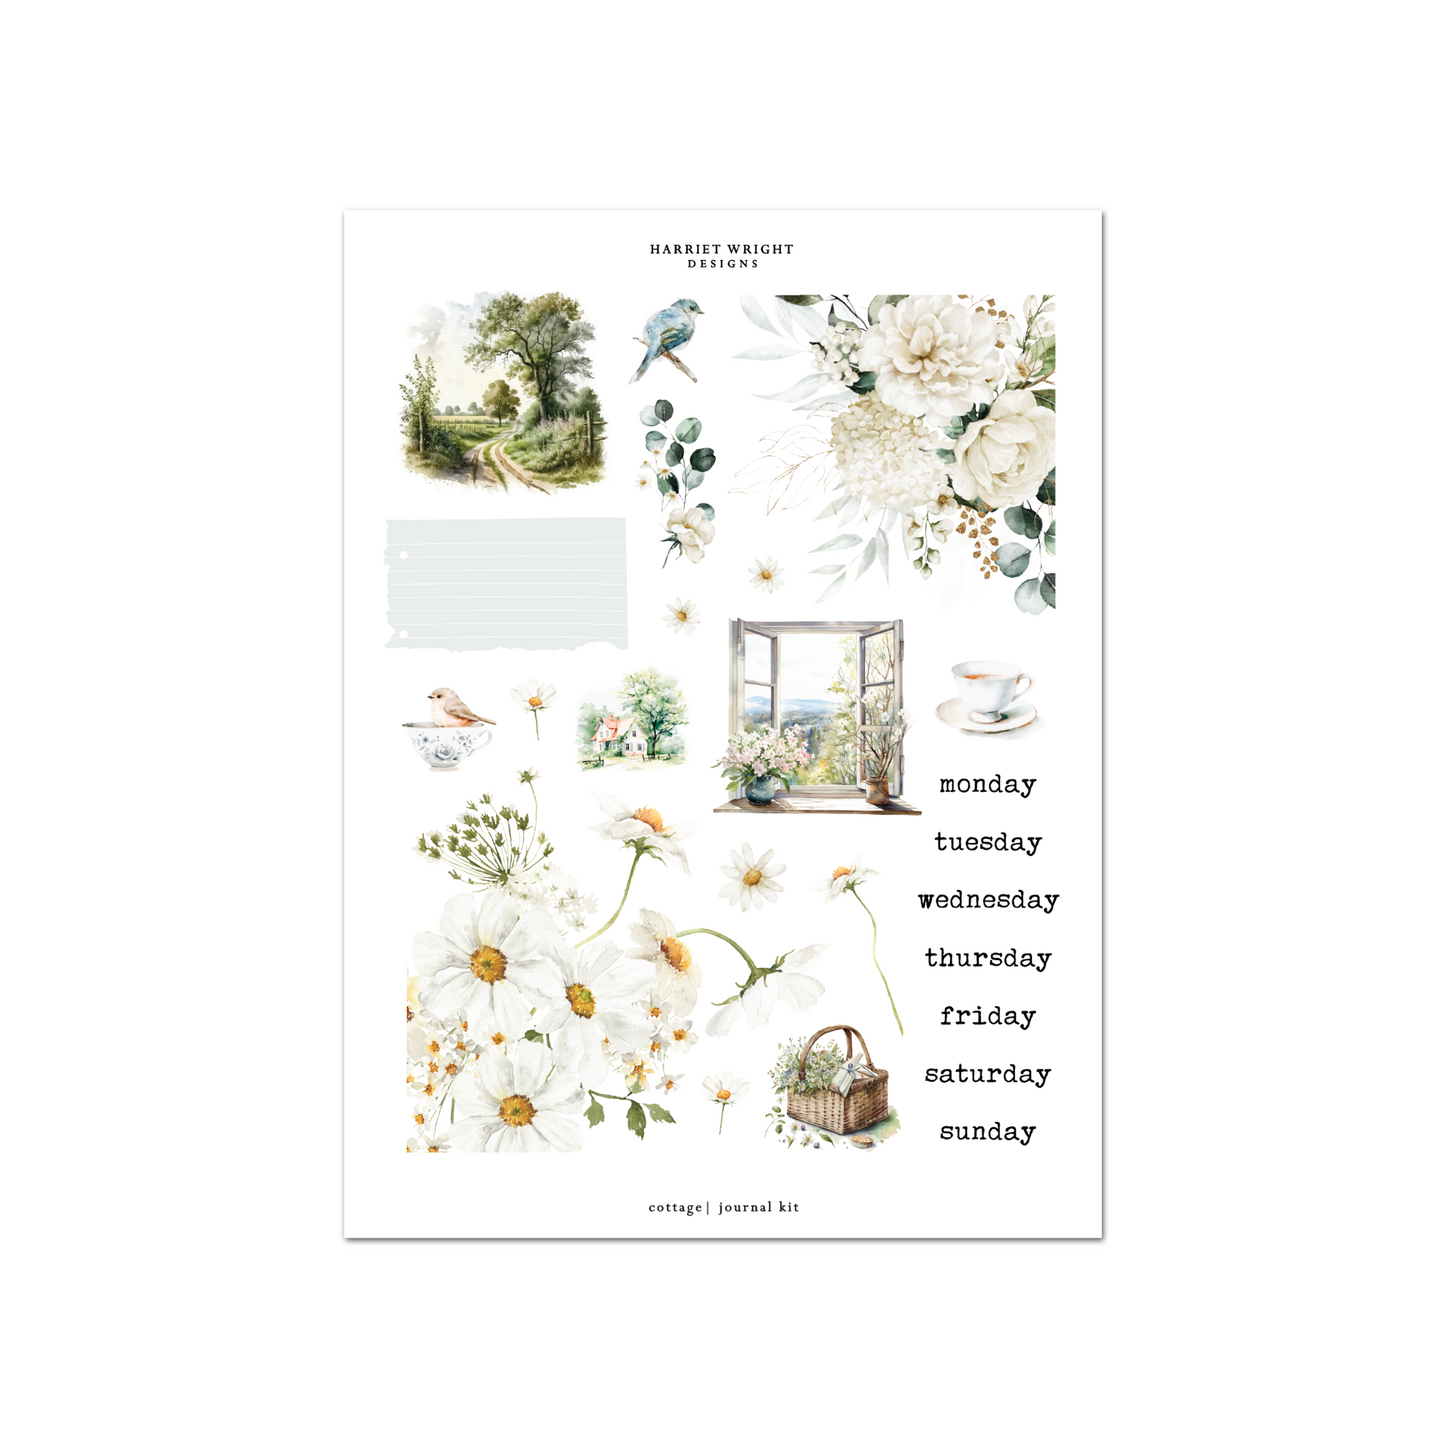 Cottage | Journal Kit